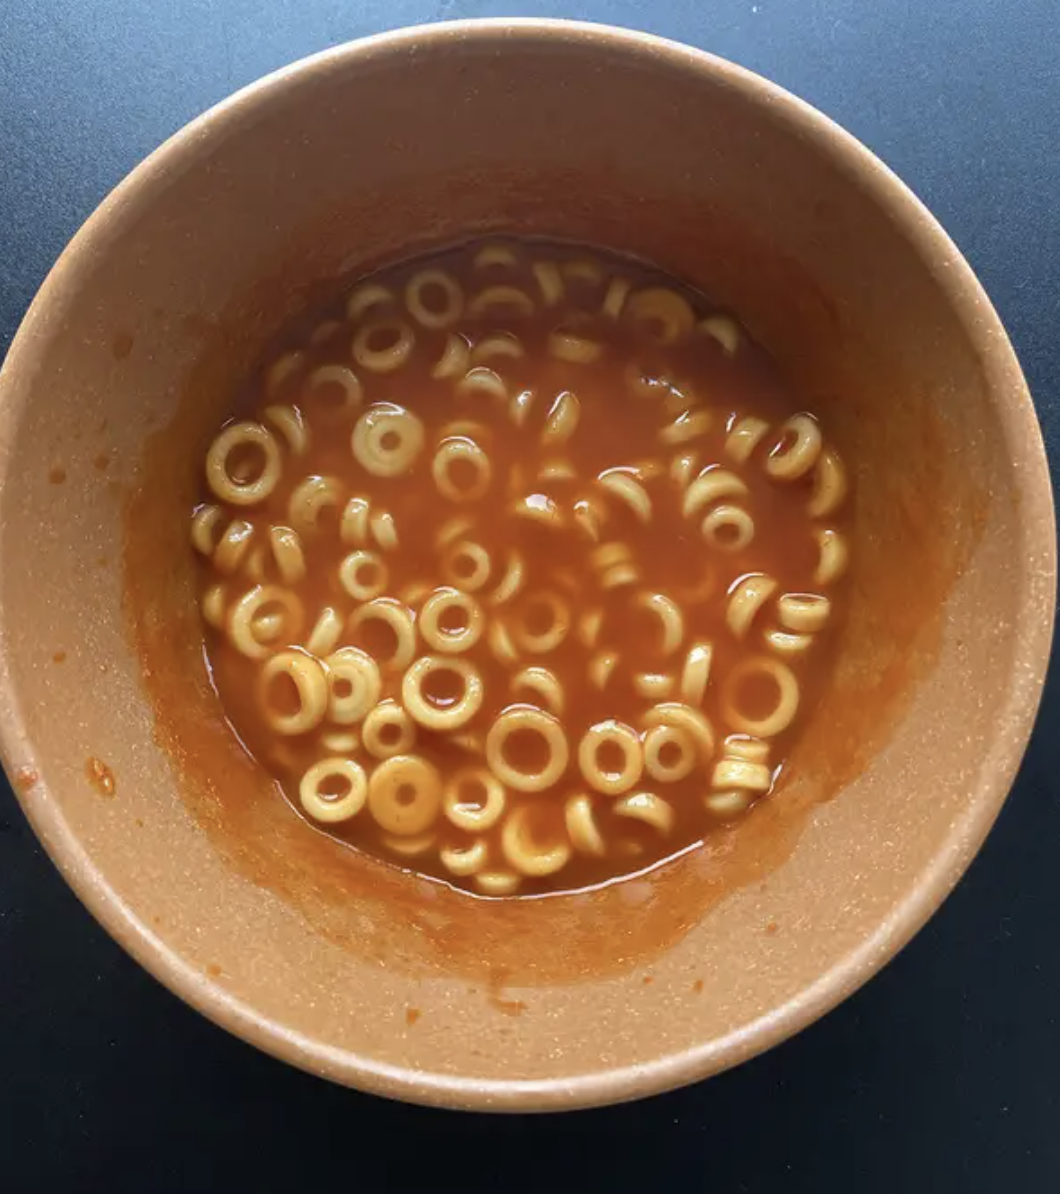 a soupy meal of O-shaped noodles